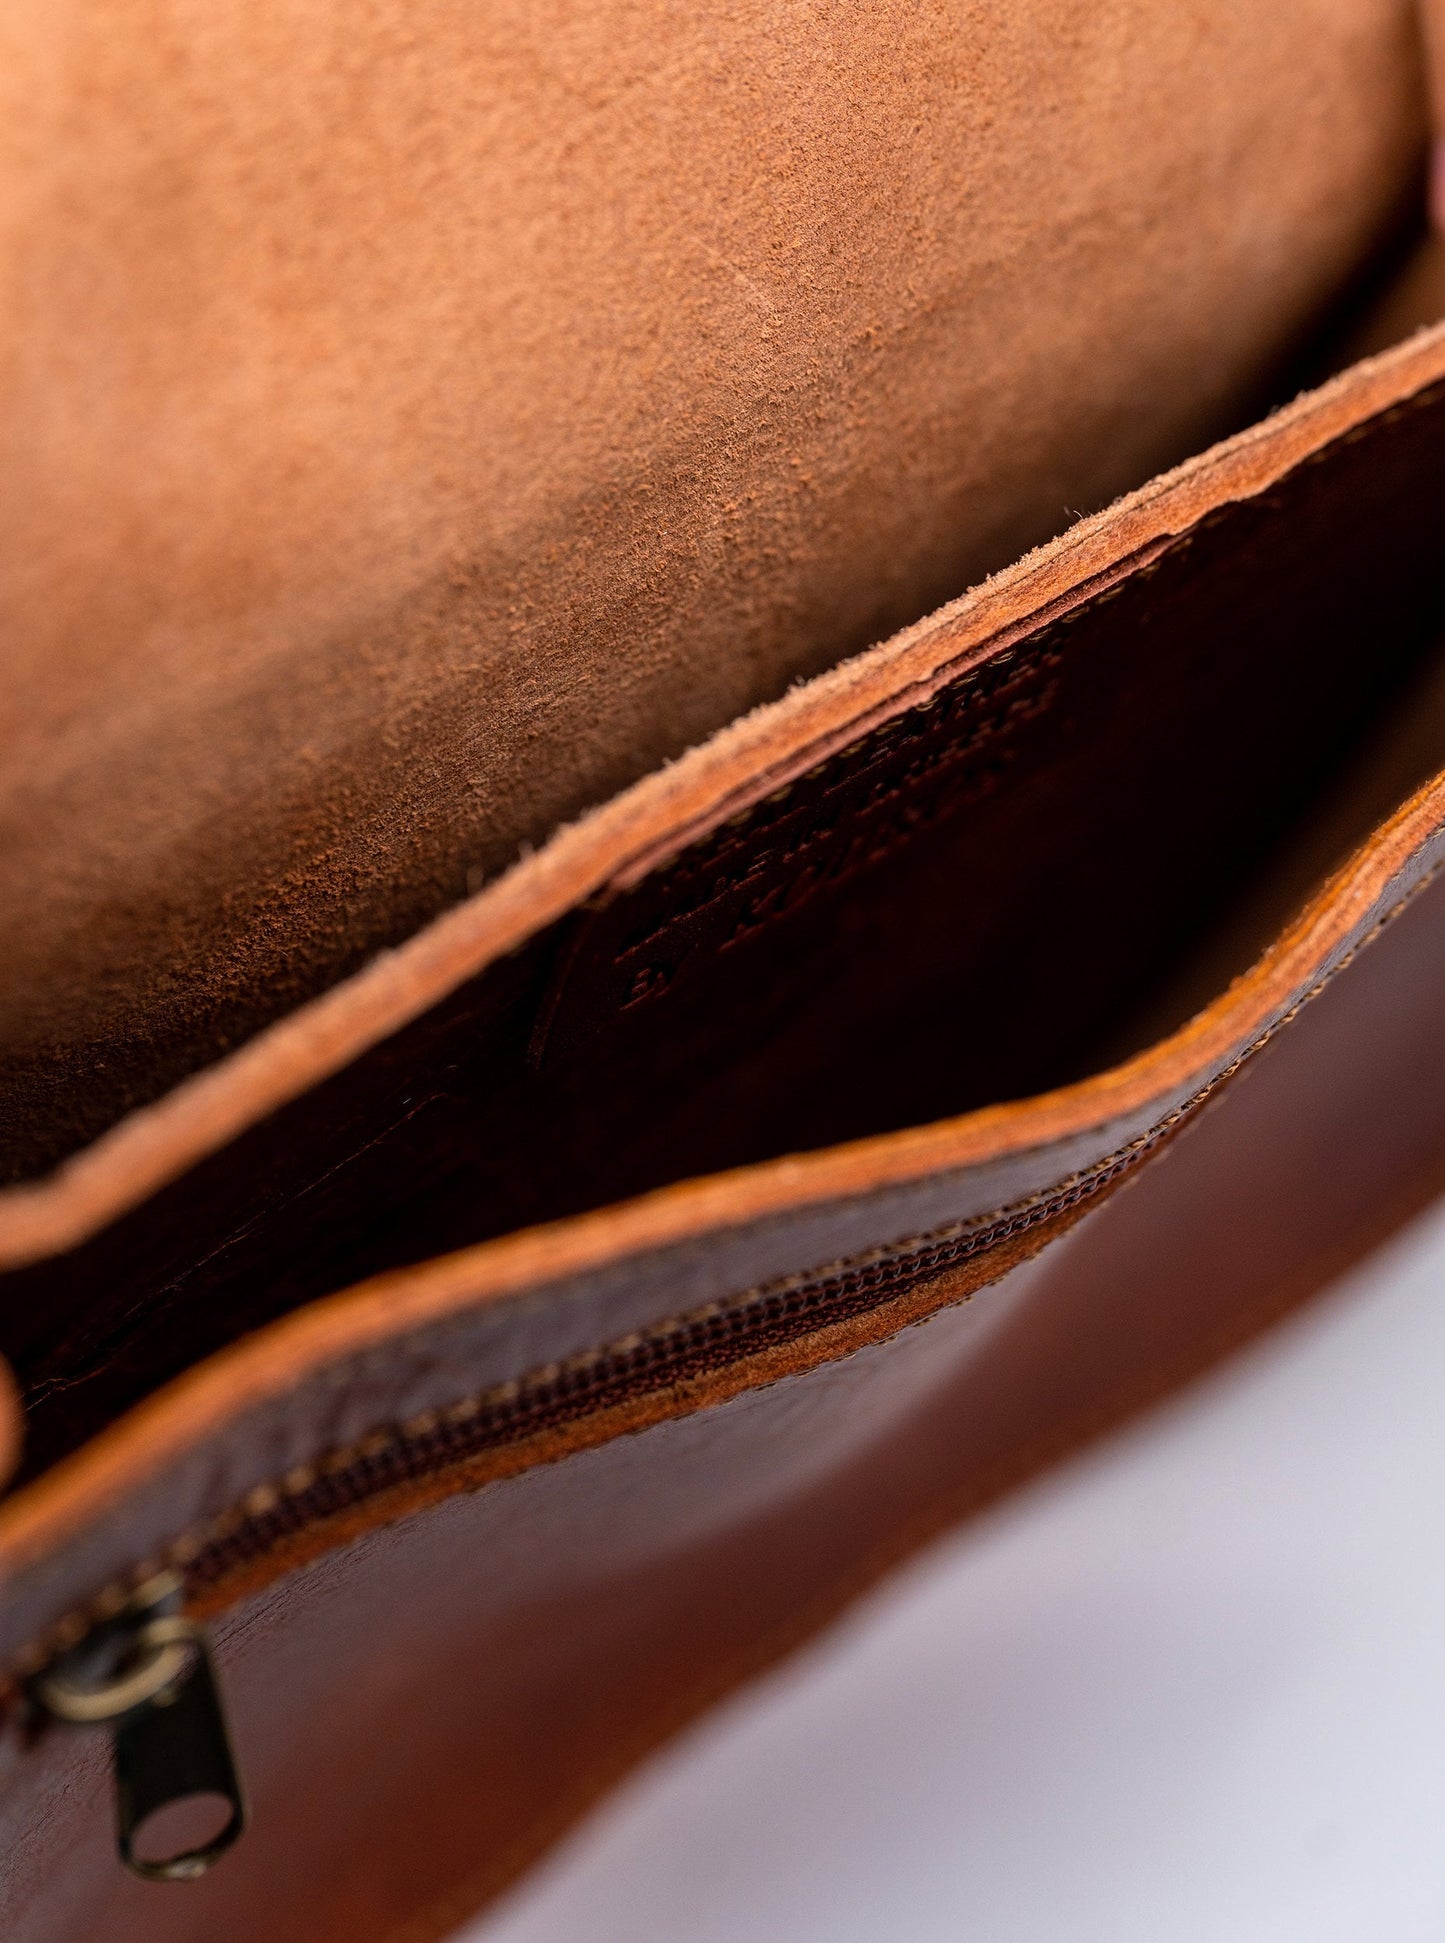 Leather crossbody bag for women, rustic saddle leather bag, tooled leather purse, umhängetasche, sac en cuir